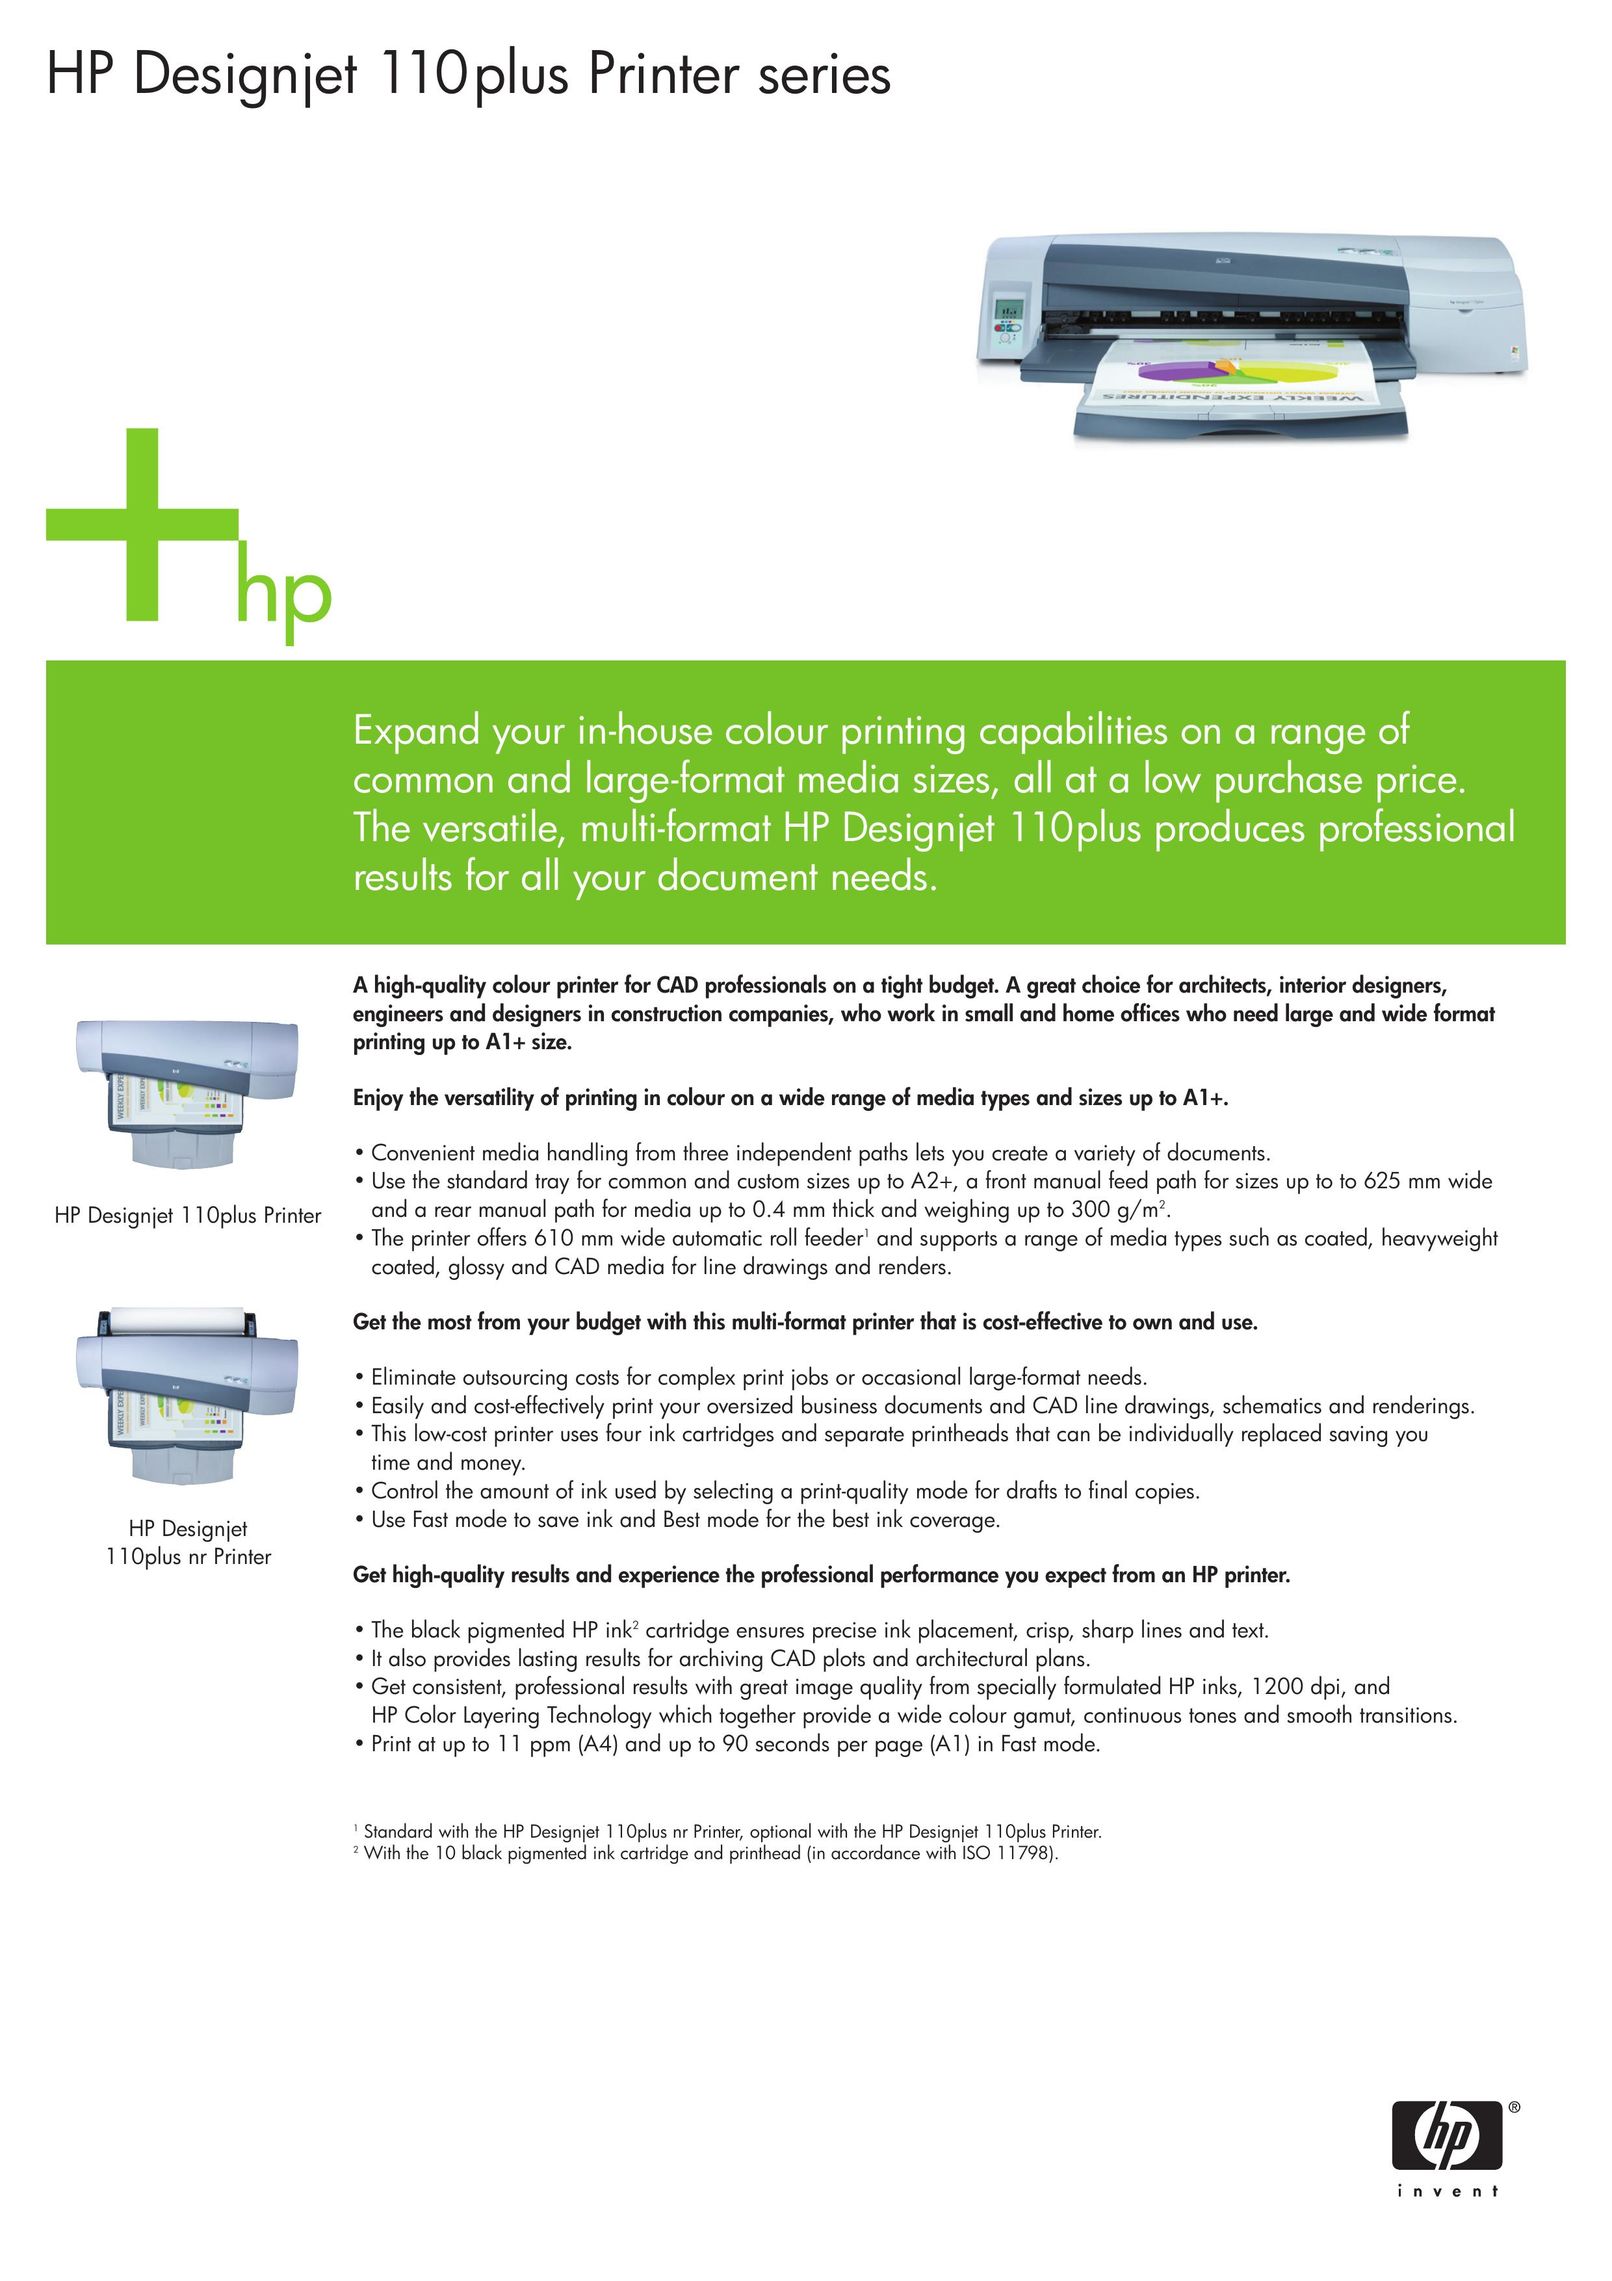 HP (Hewlett-Packard) 110plus Printer User Manual